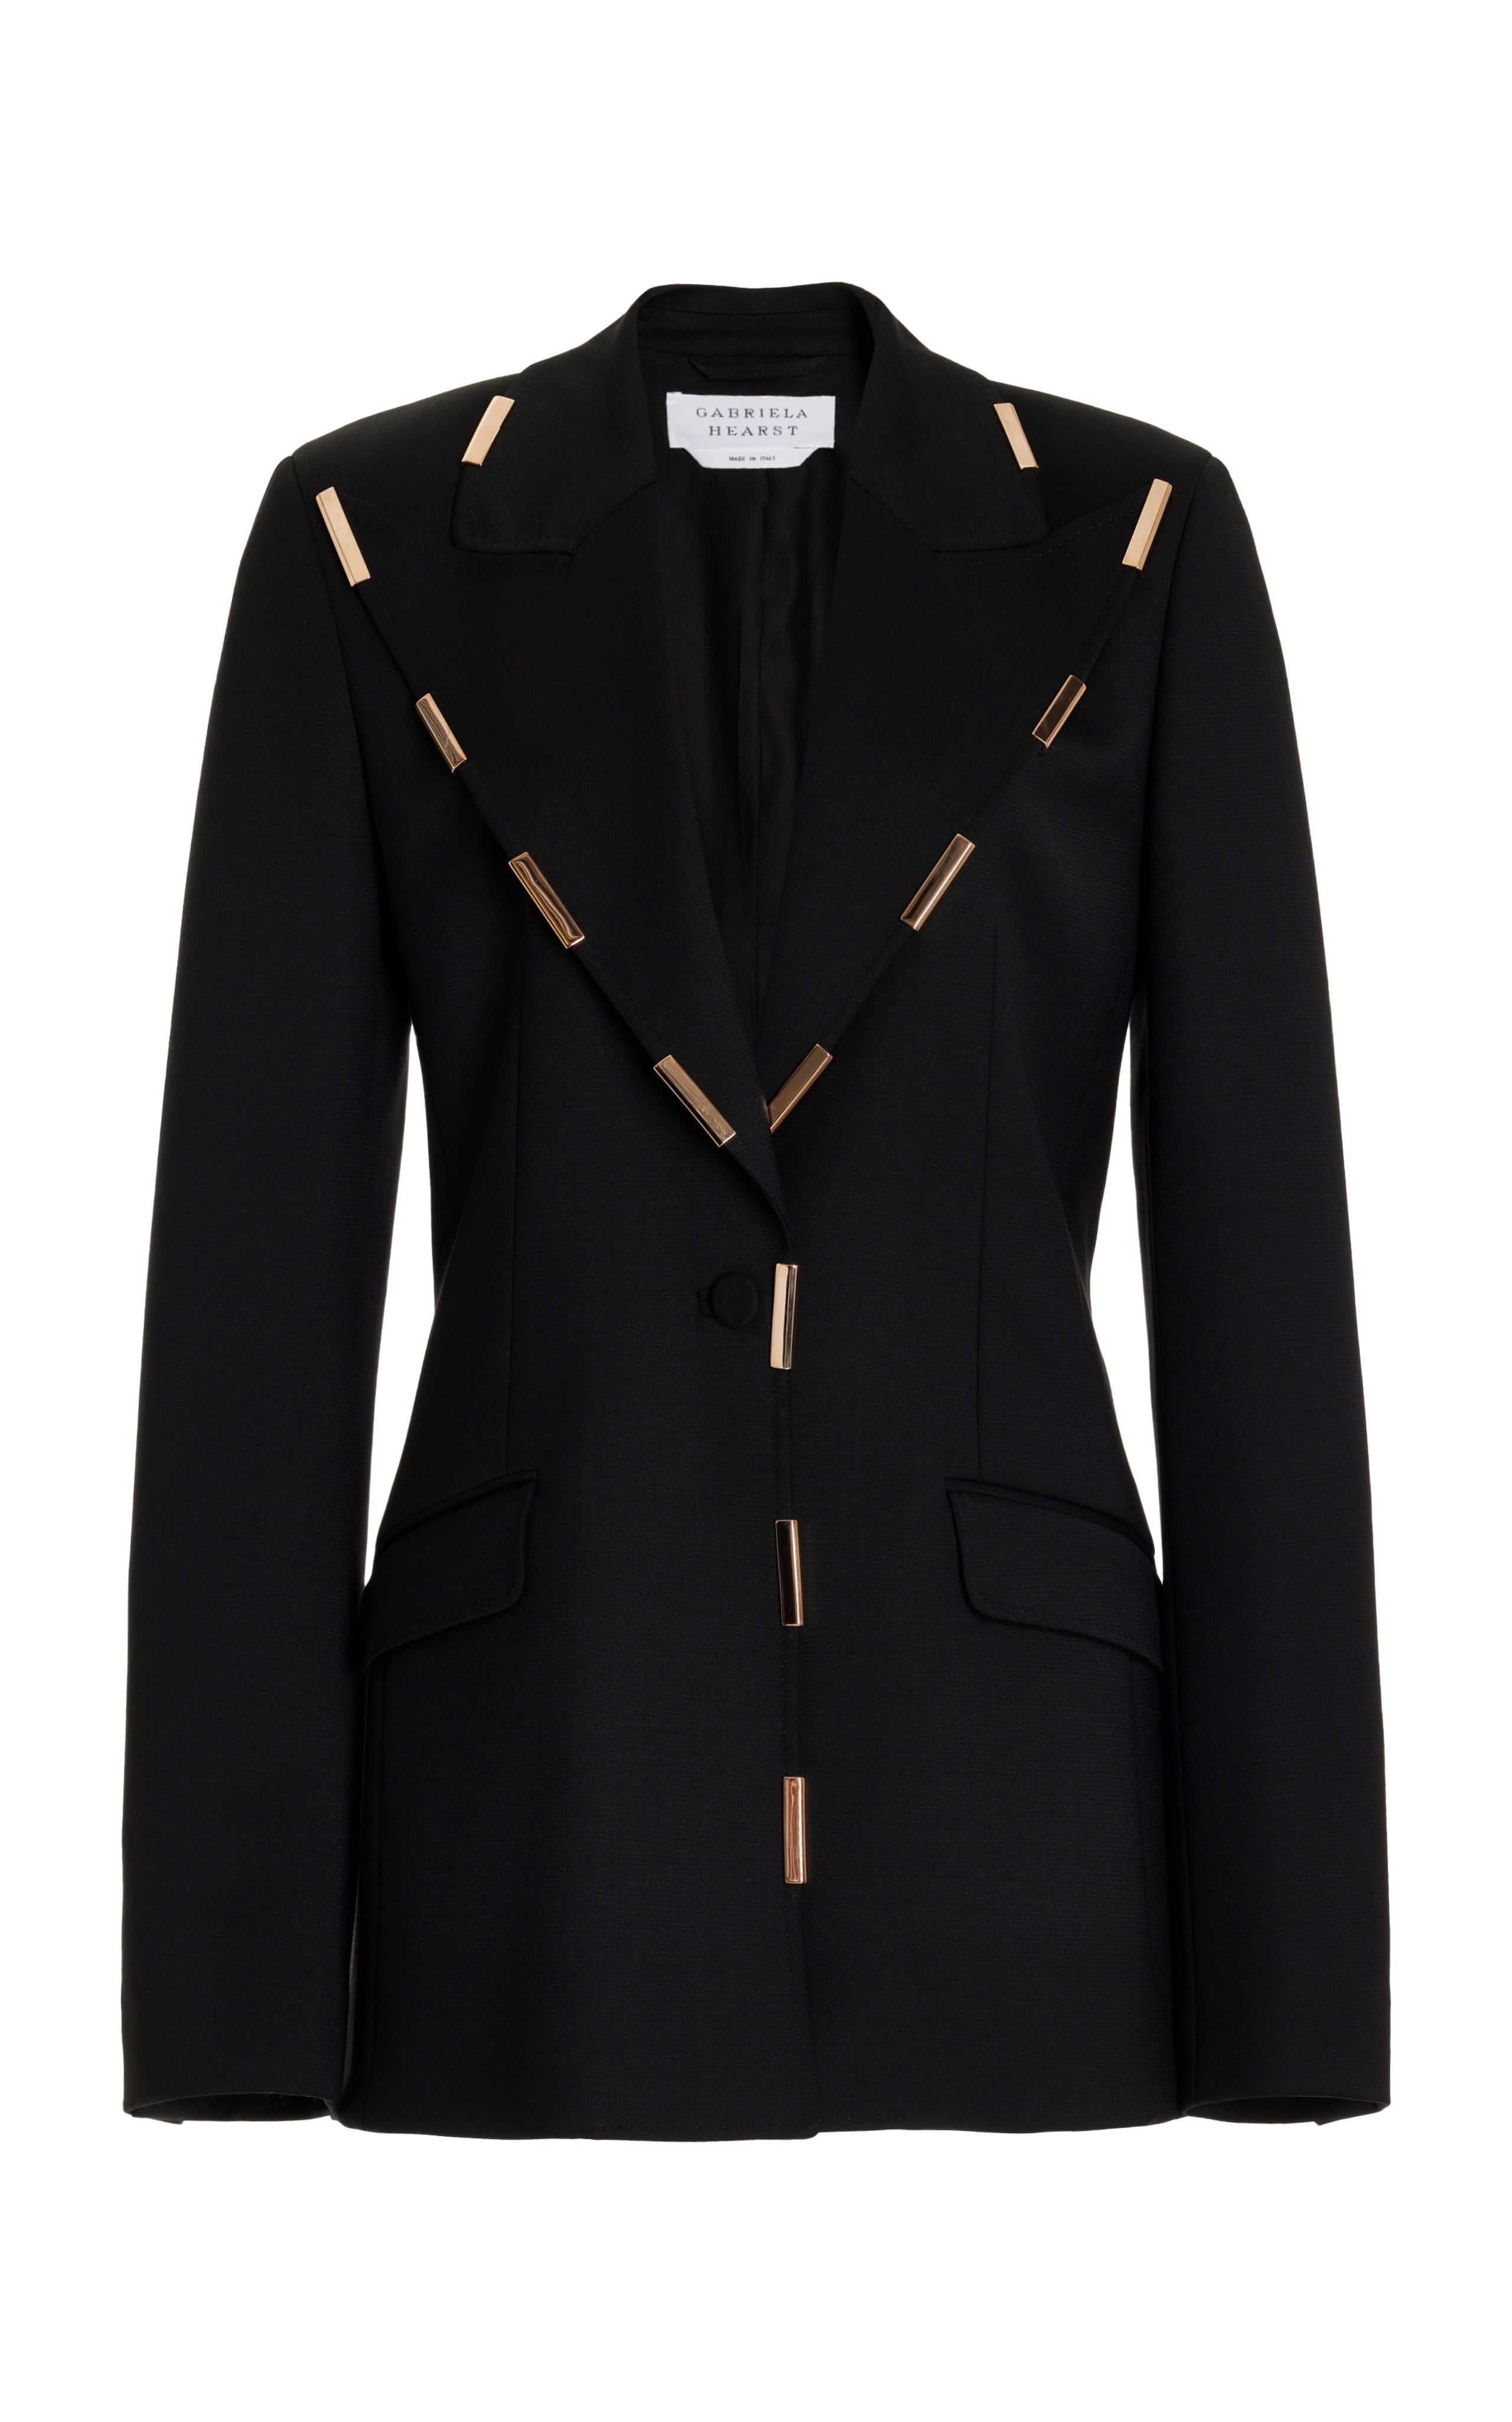 Leiva Blazer in Black Sportswear Wool with Gold Bars - 1